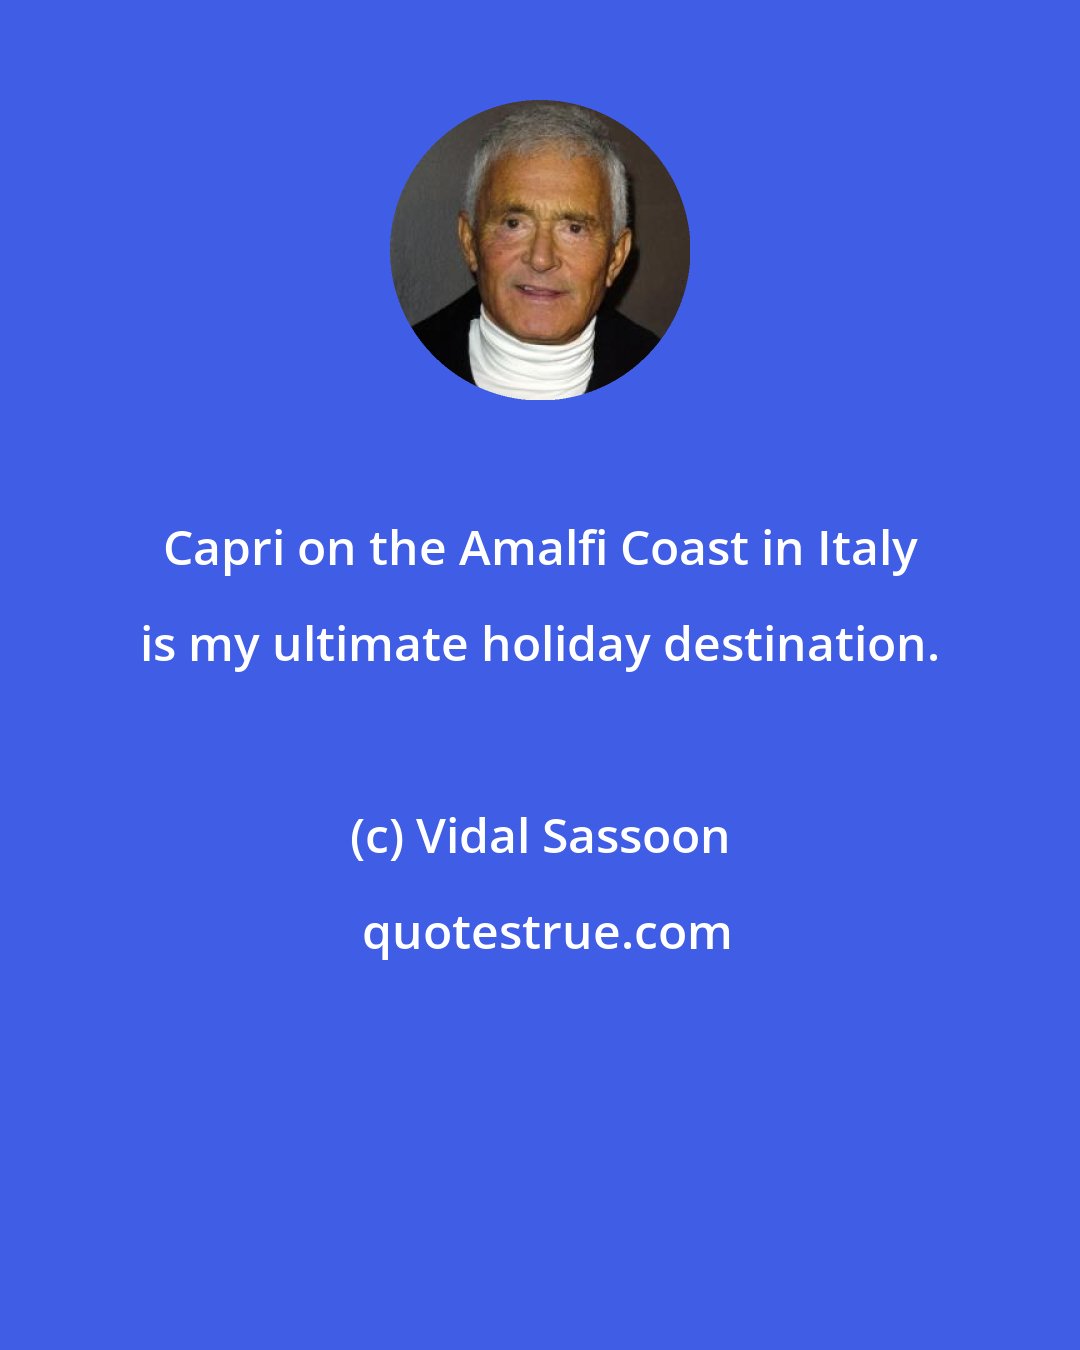 Vidal Sassoon: Capri on the Amalfi Coast in Italy is my ultimate holiday destination.